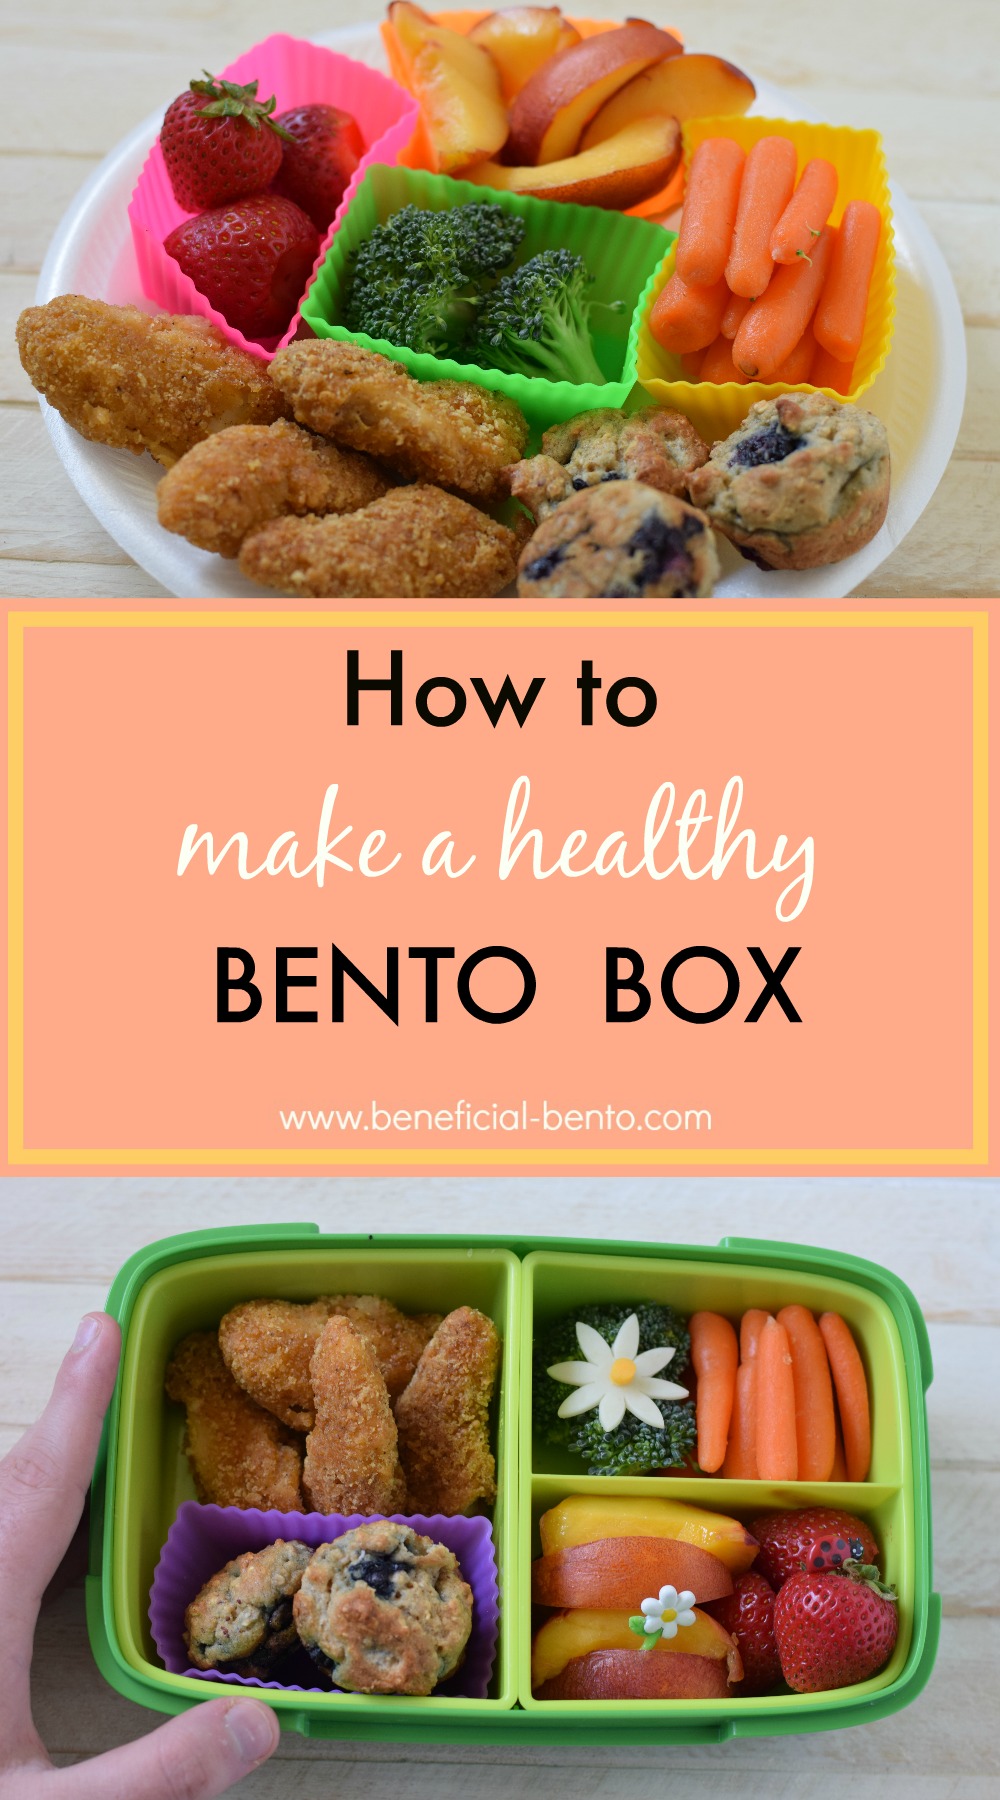 https://static.beneficial-bento.com/uploads/2017/06/How-to-make-a-healthy-bento-box-PIN1.jpg